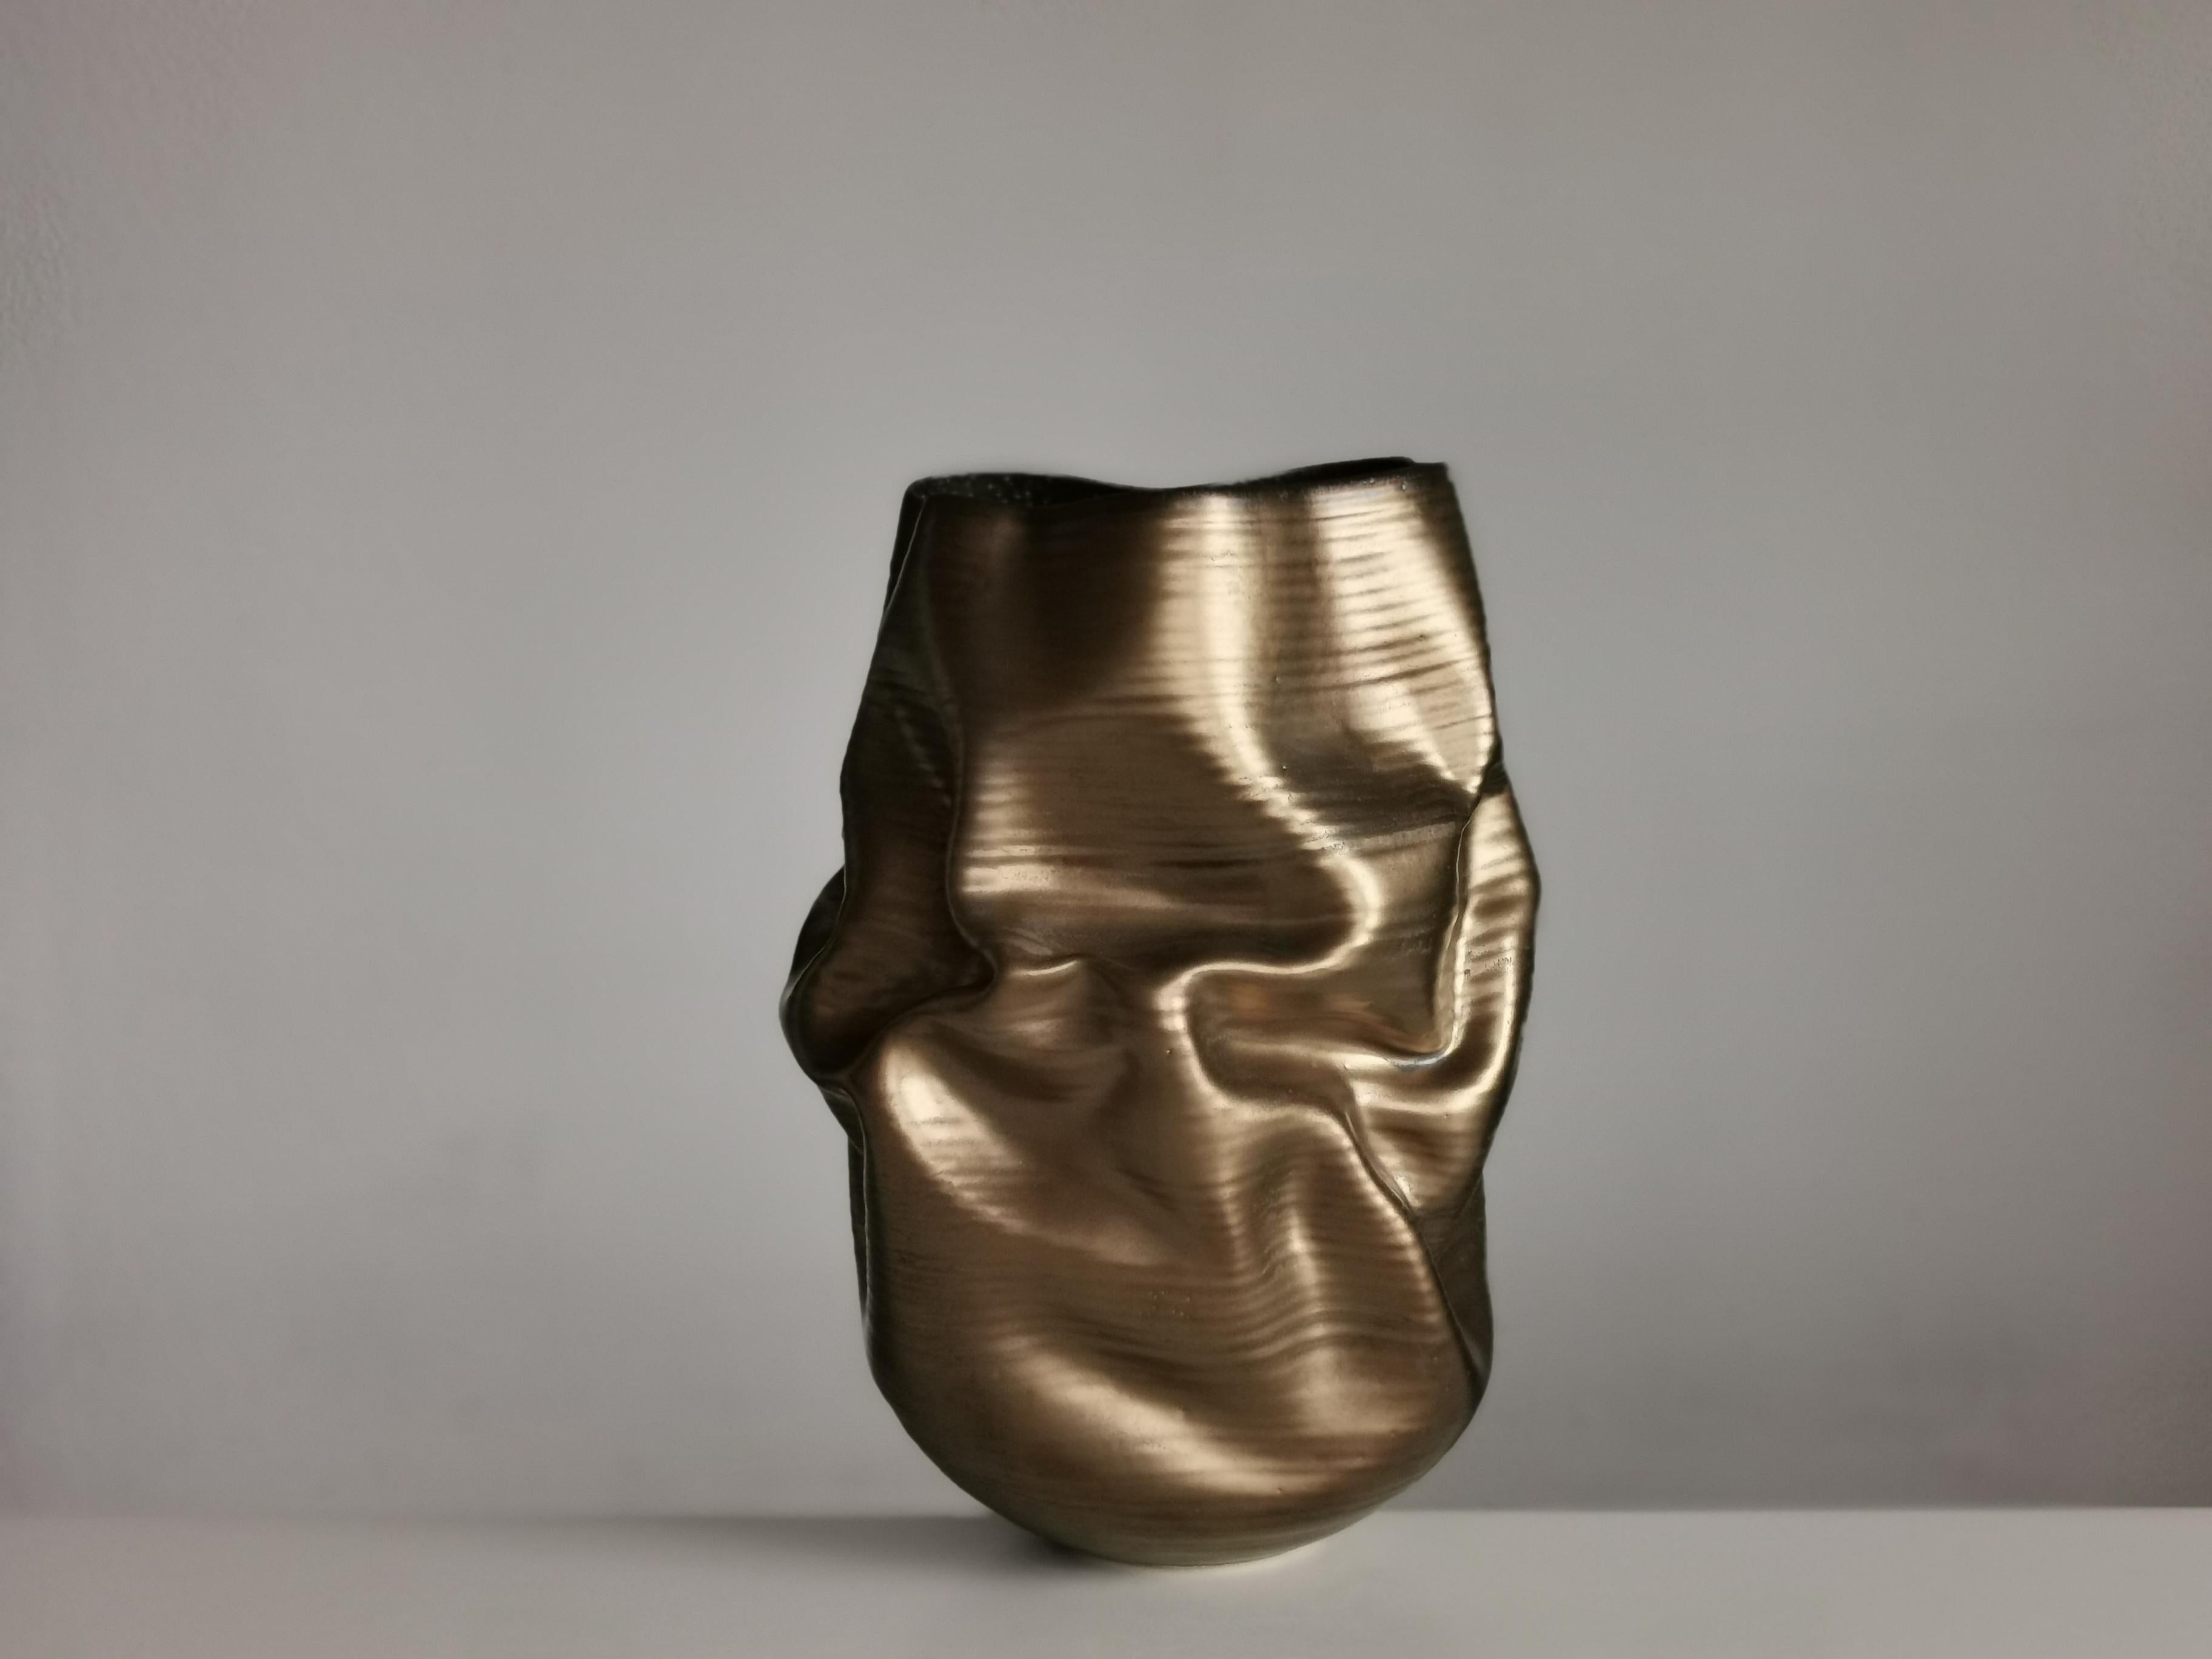 Clay Gold Crumpled Form, Unique Ceramic Sculpture Vessel N.76